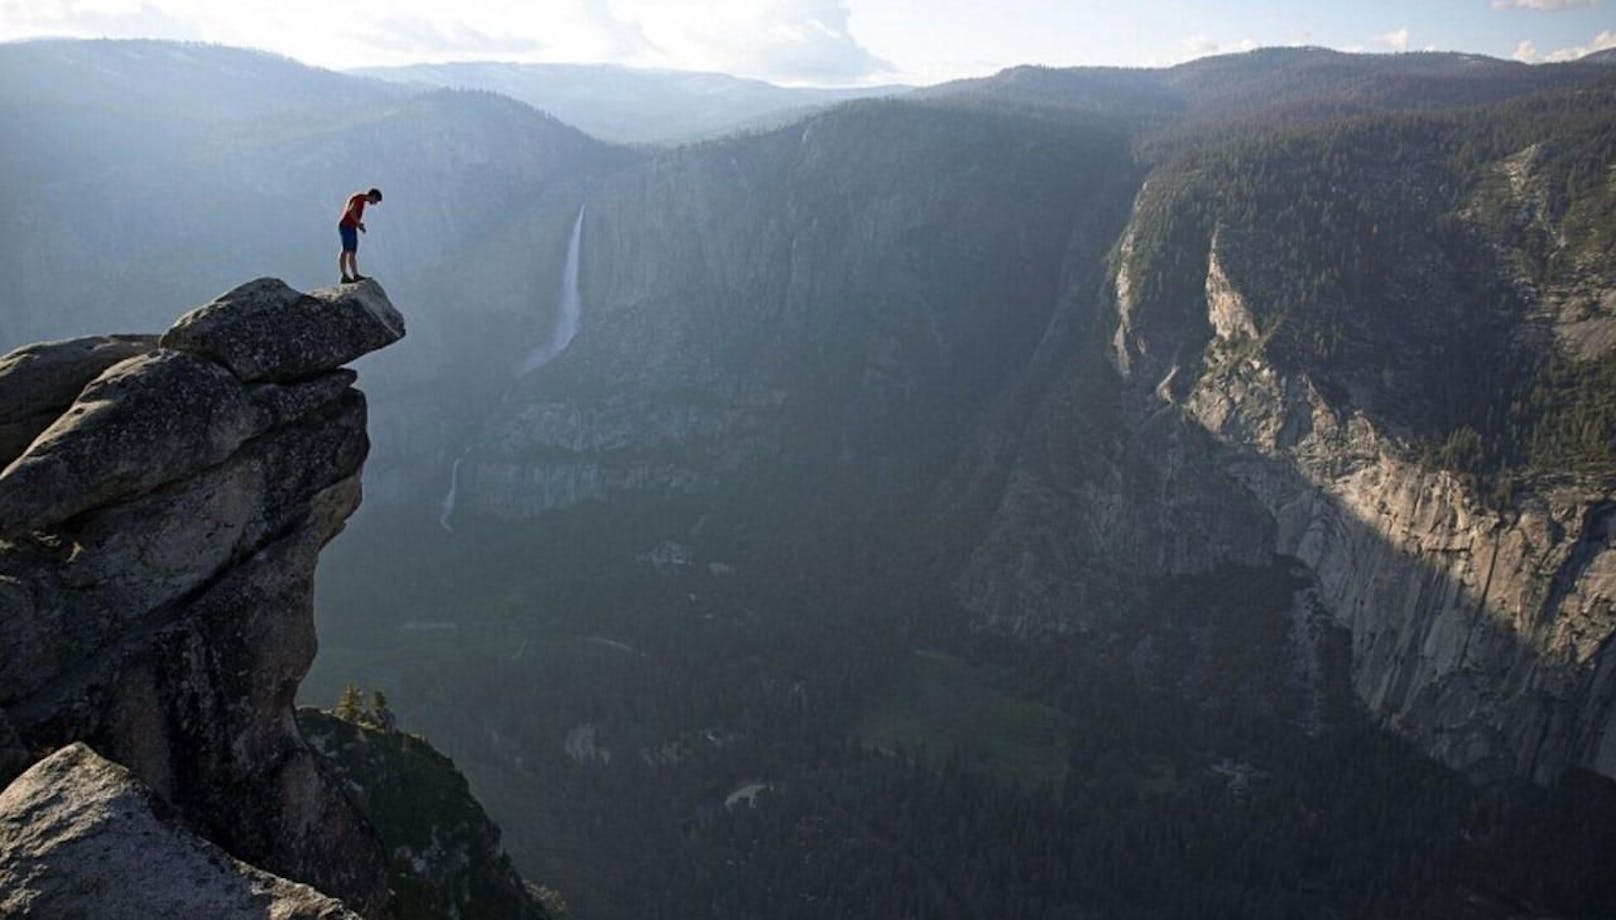 Am Ziel seiner Träume: Alex Honnold steht am Gipfel des &quot;El Capitan&quot;. 